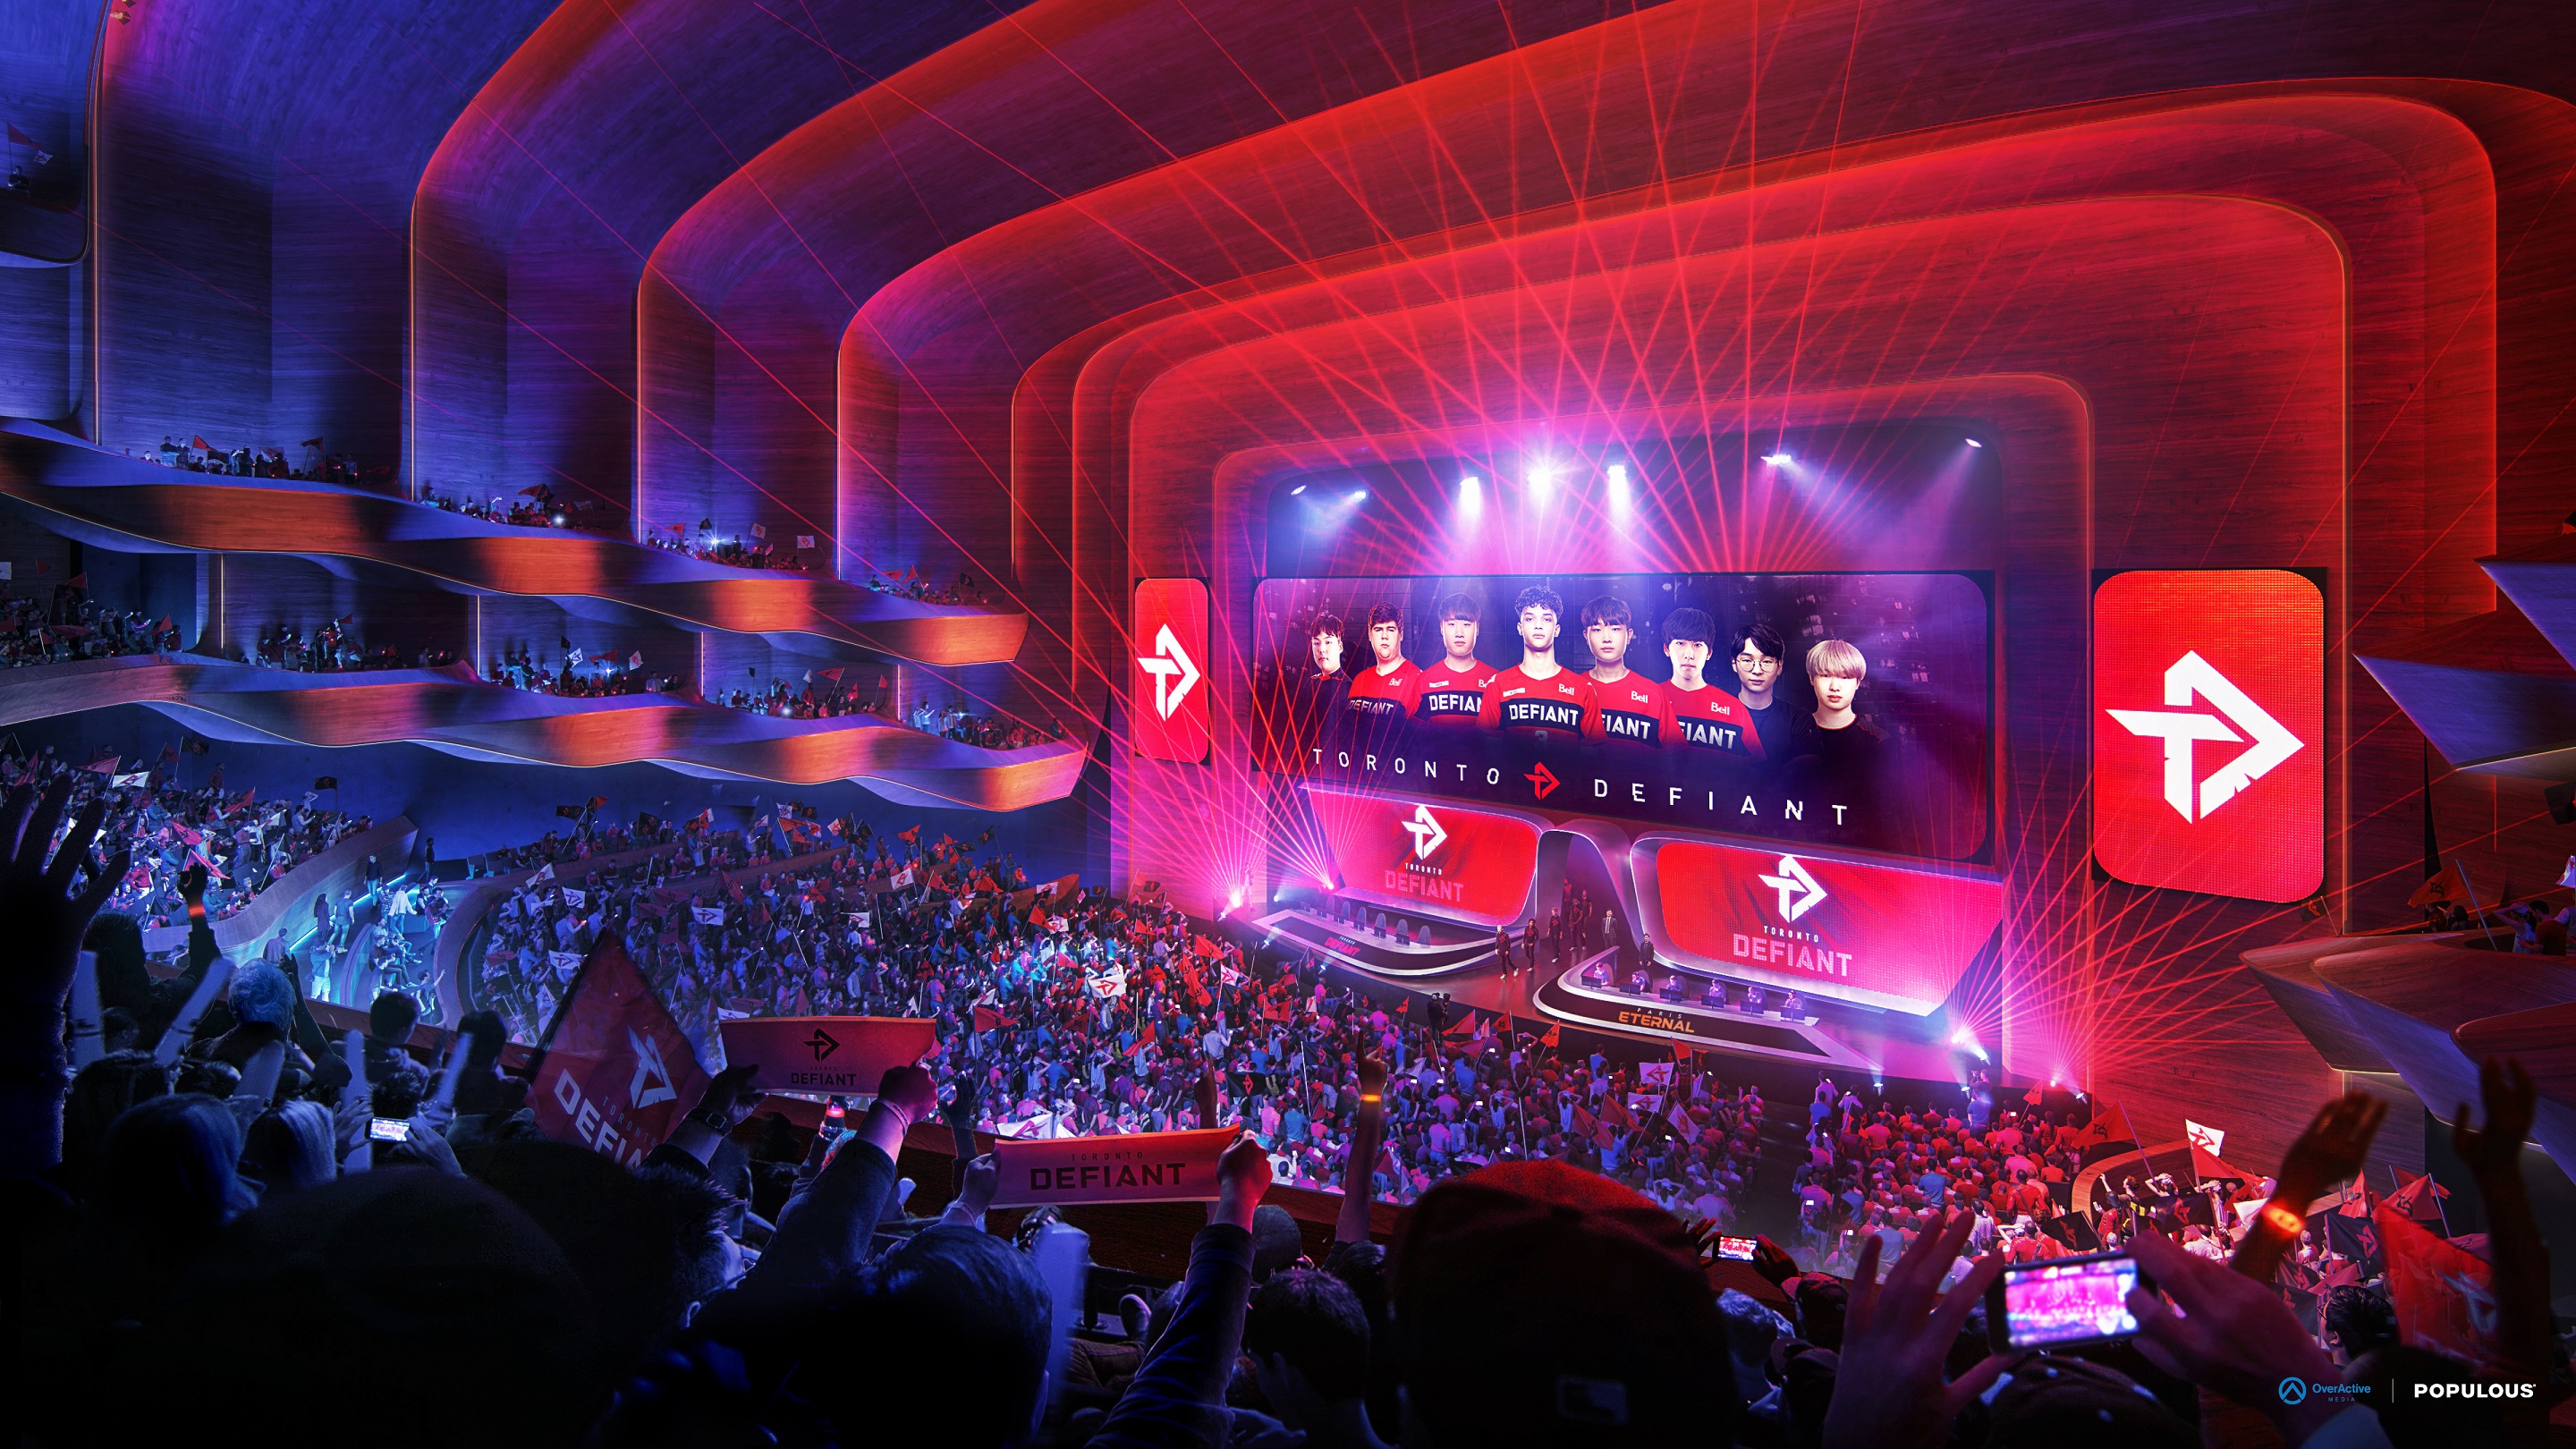 Populous-designed performance venue set up for eSports